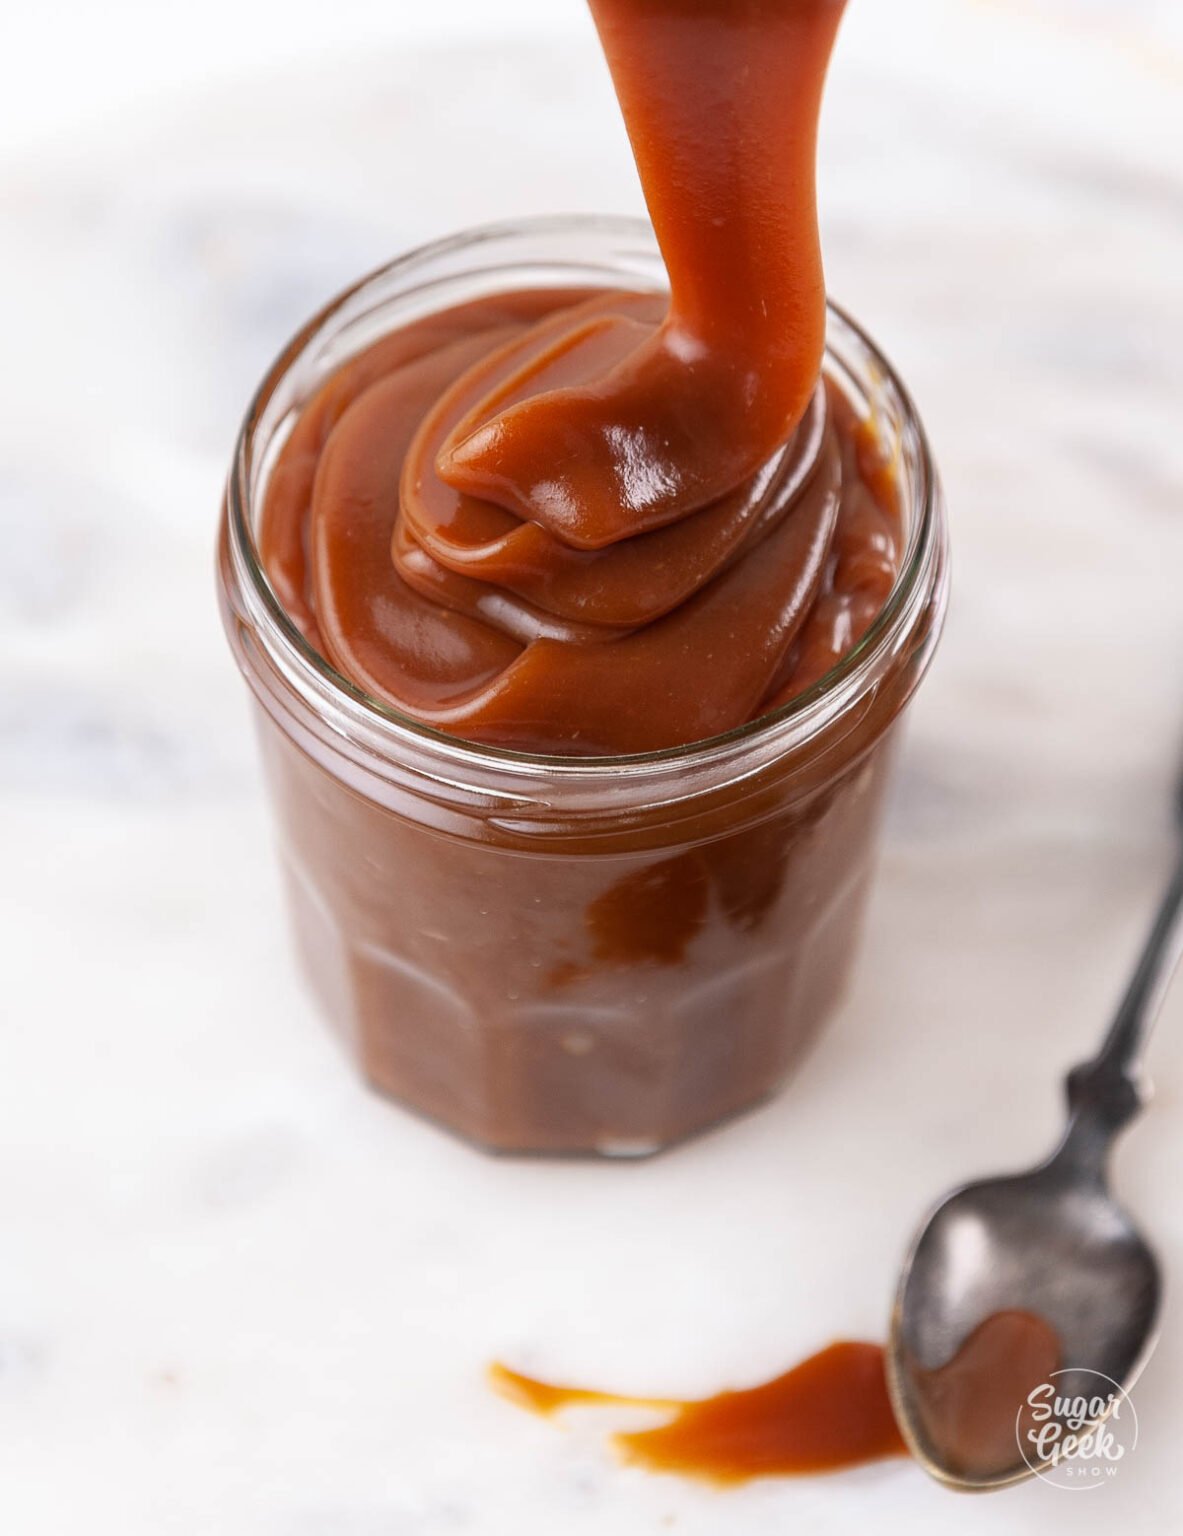 Caramel Sauce Recipe (Easy) + Video Tutorial | Sugar Geek Show